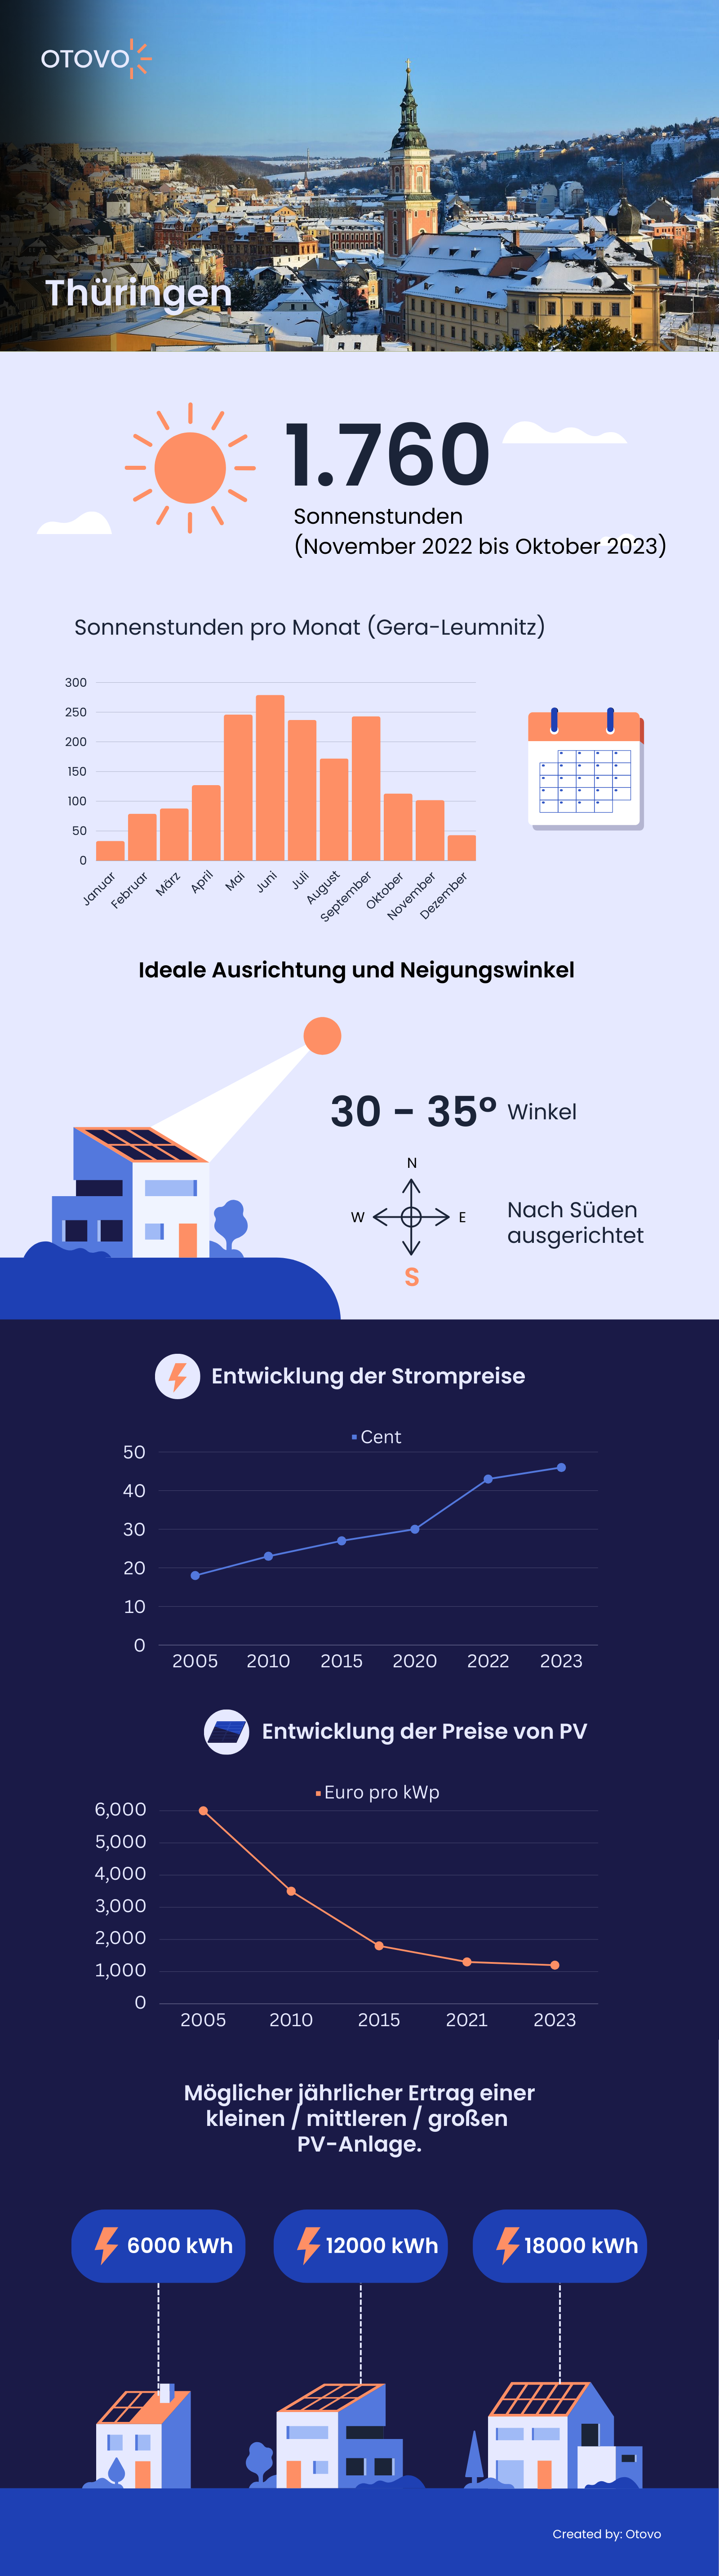 Infografik zu Solaranlagen in Thüringen